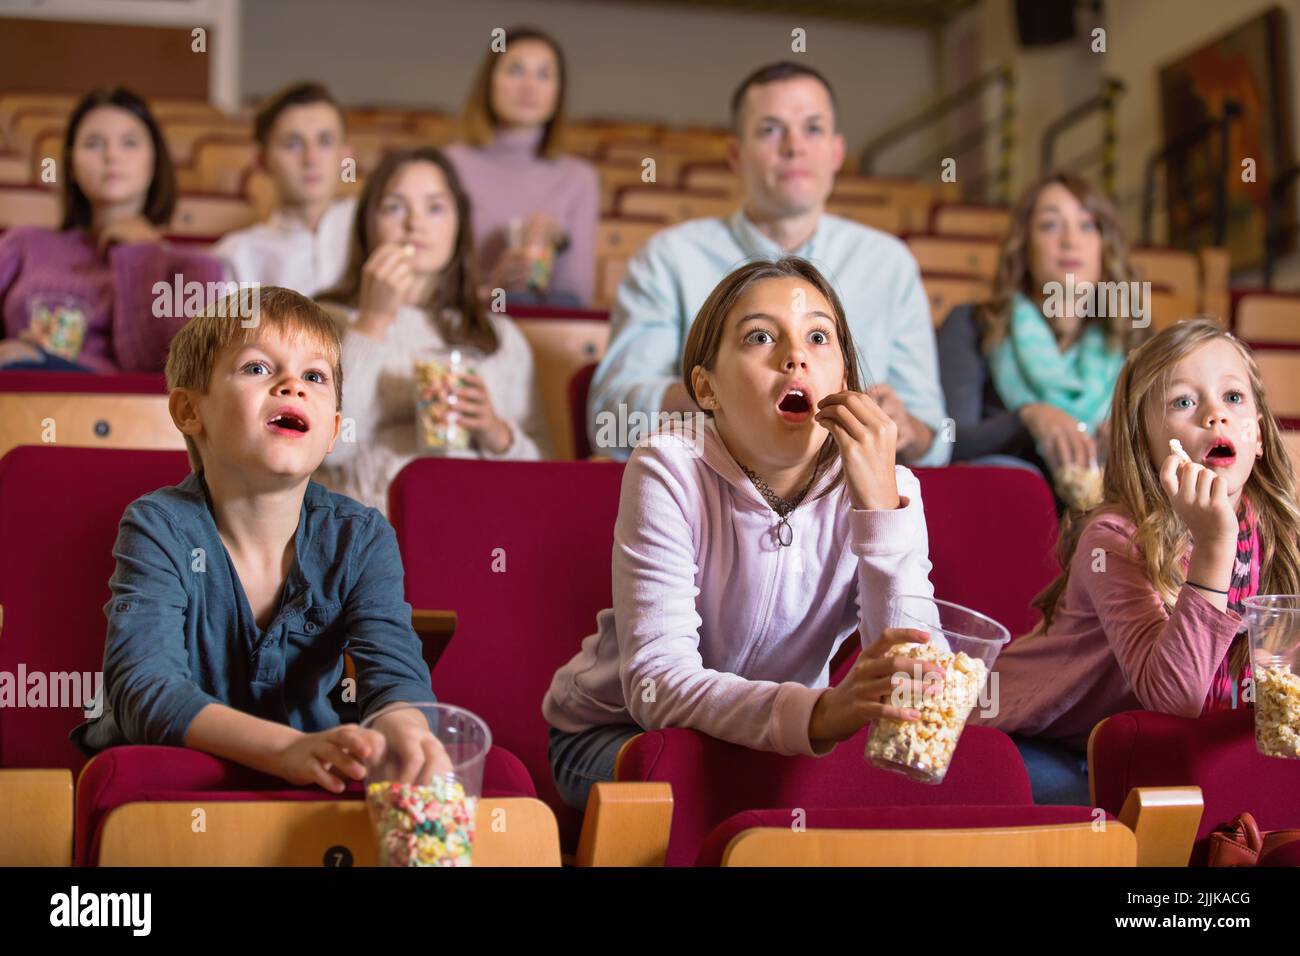 Number of people enjoying film screening and popcorn Stock Photo